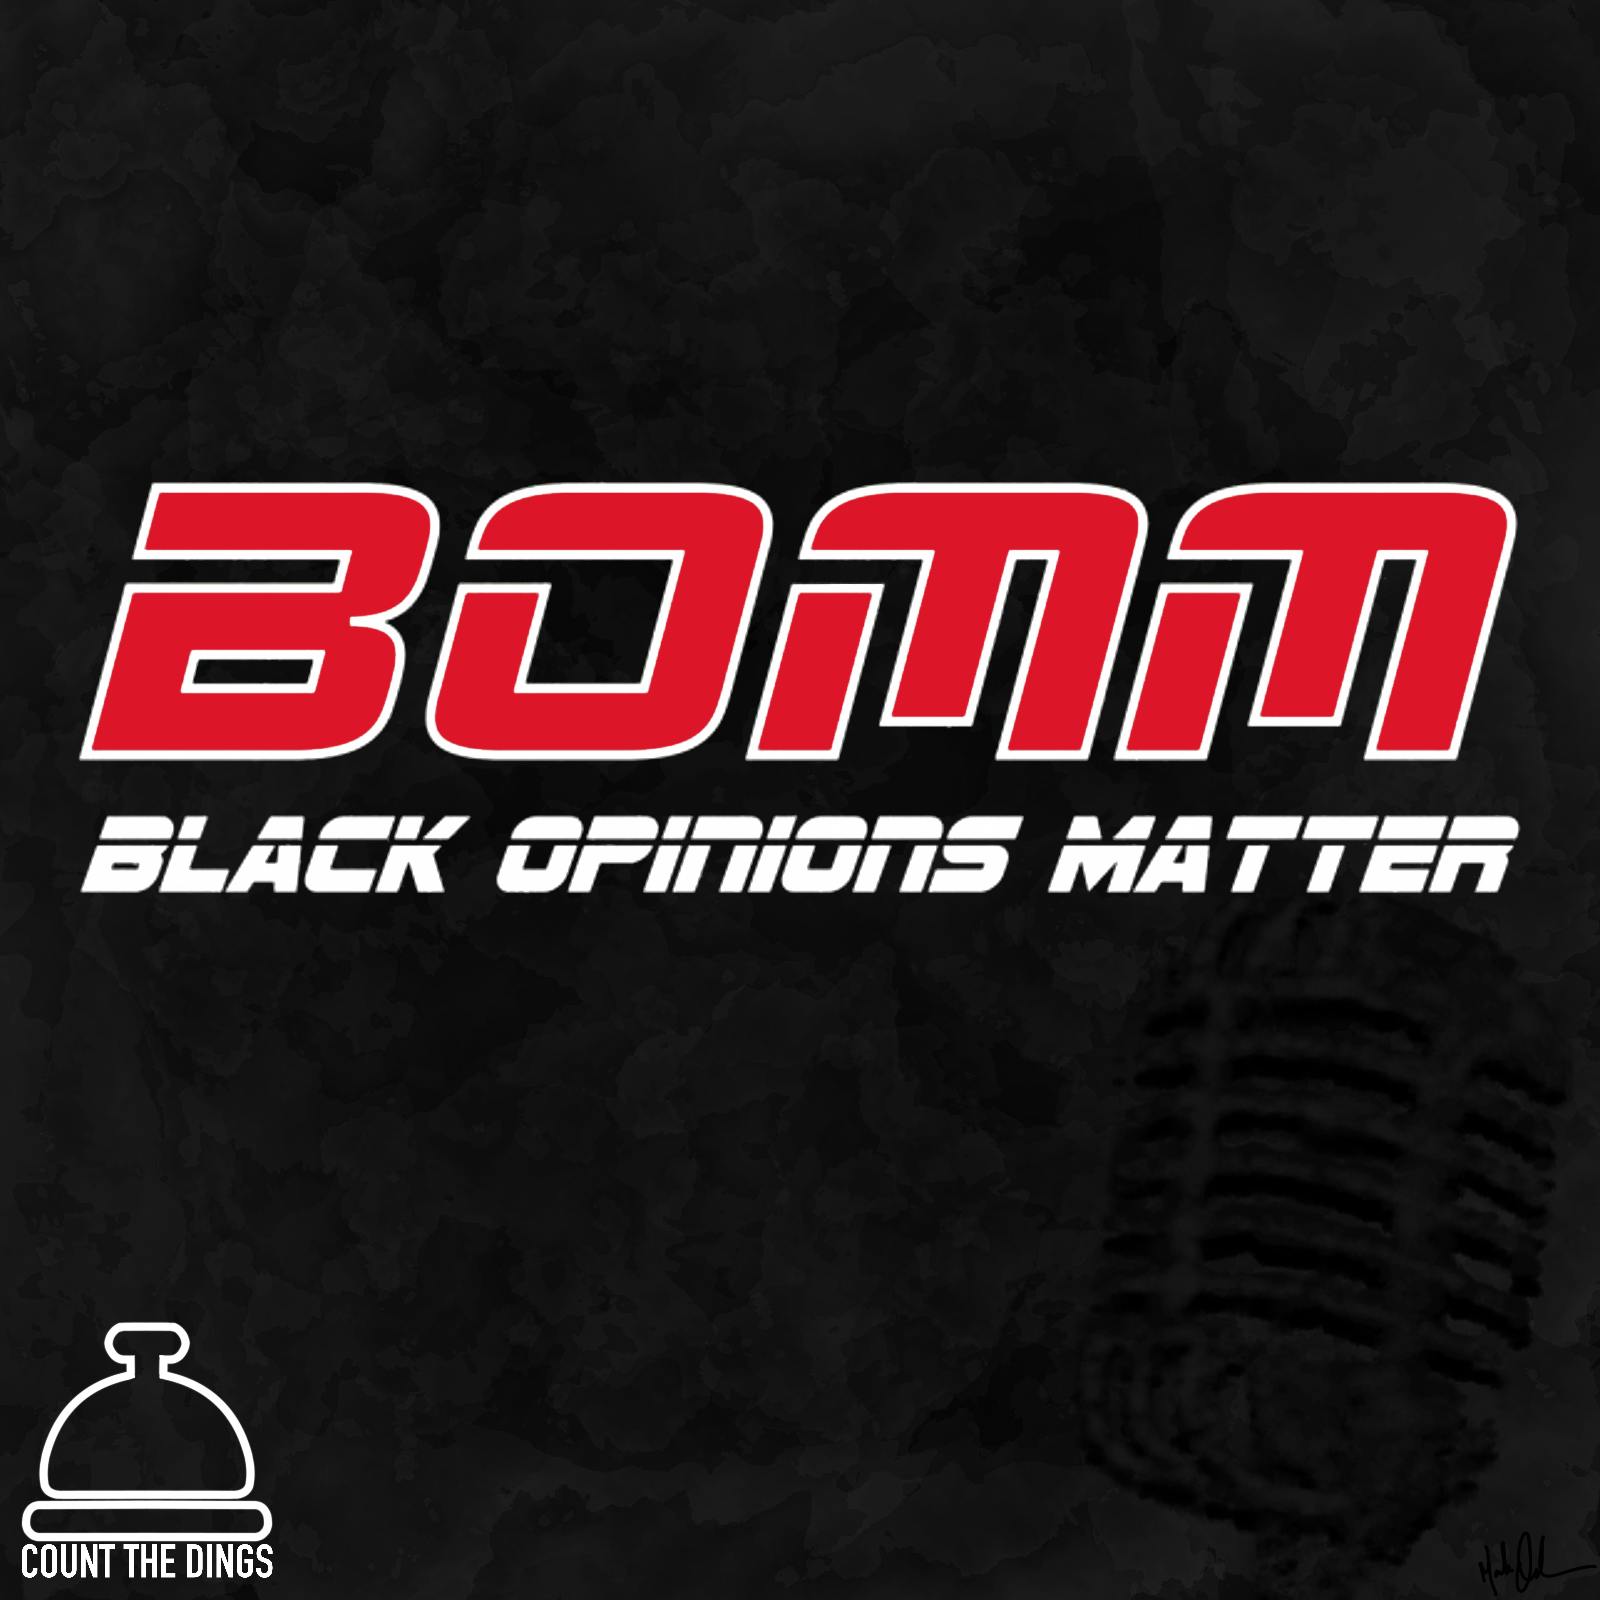 BOMM: Black Opinions Matter